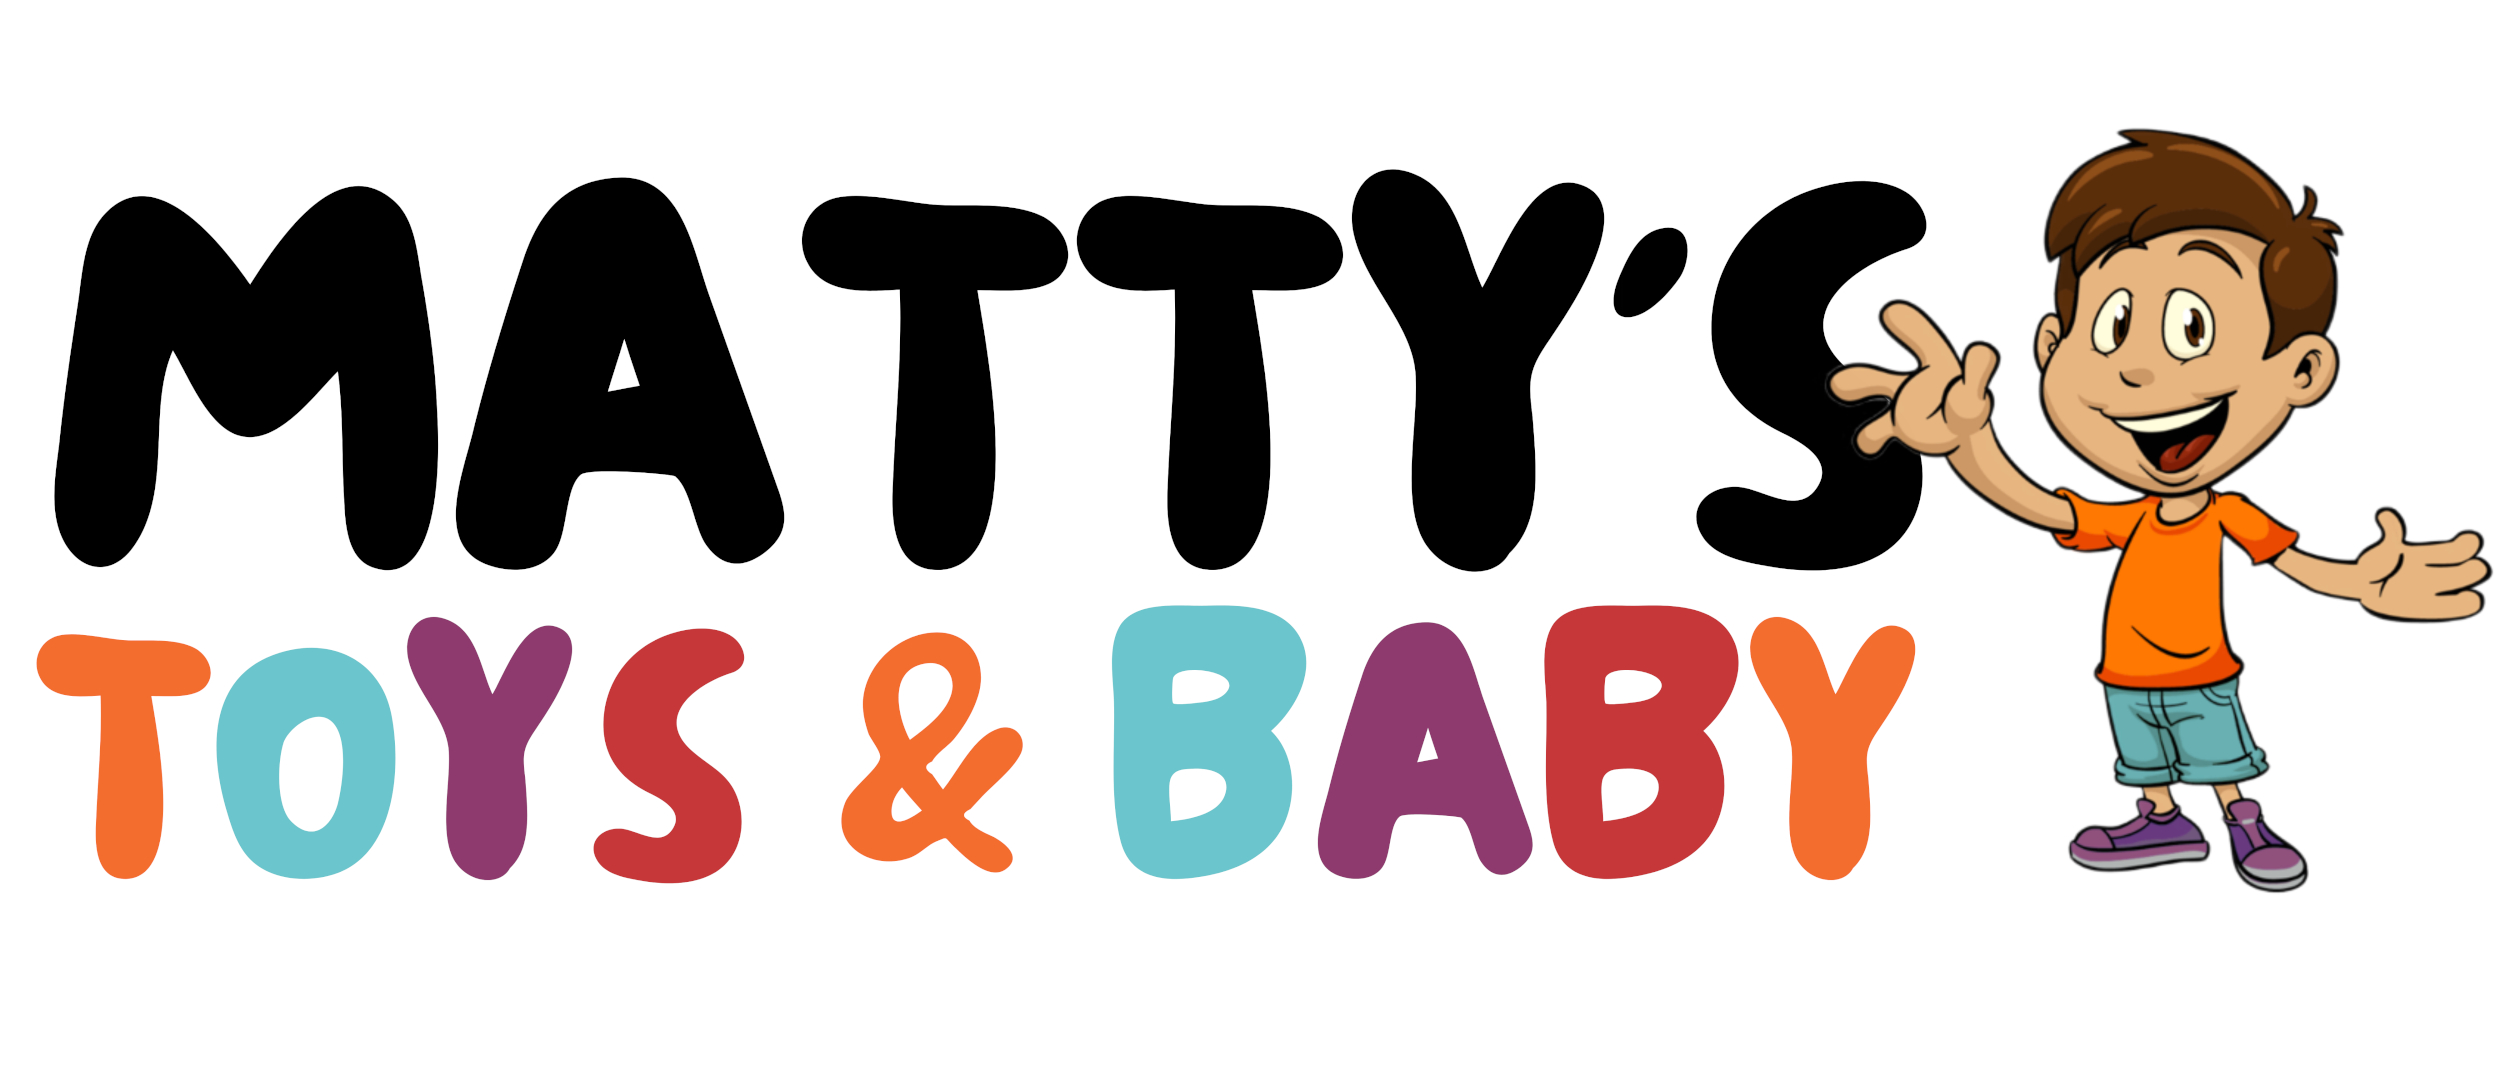 Matty's Toys & Baby logo